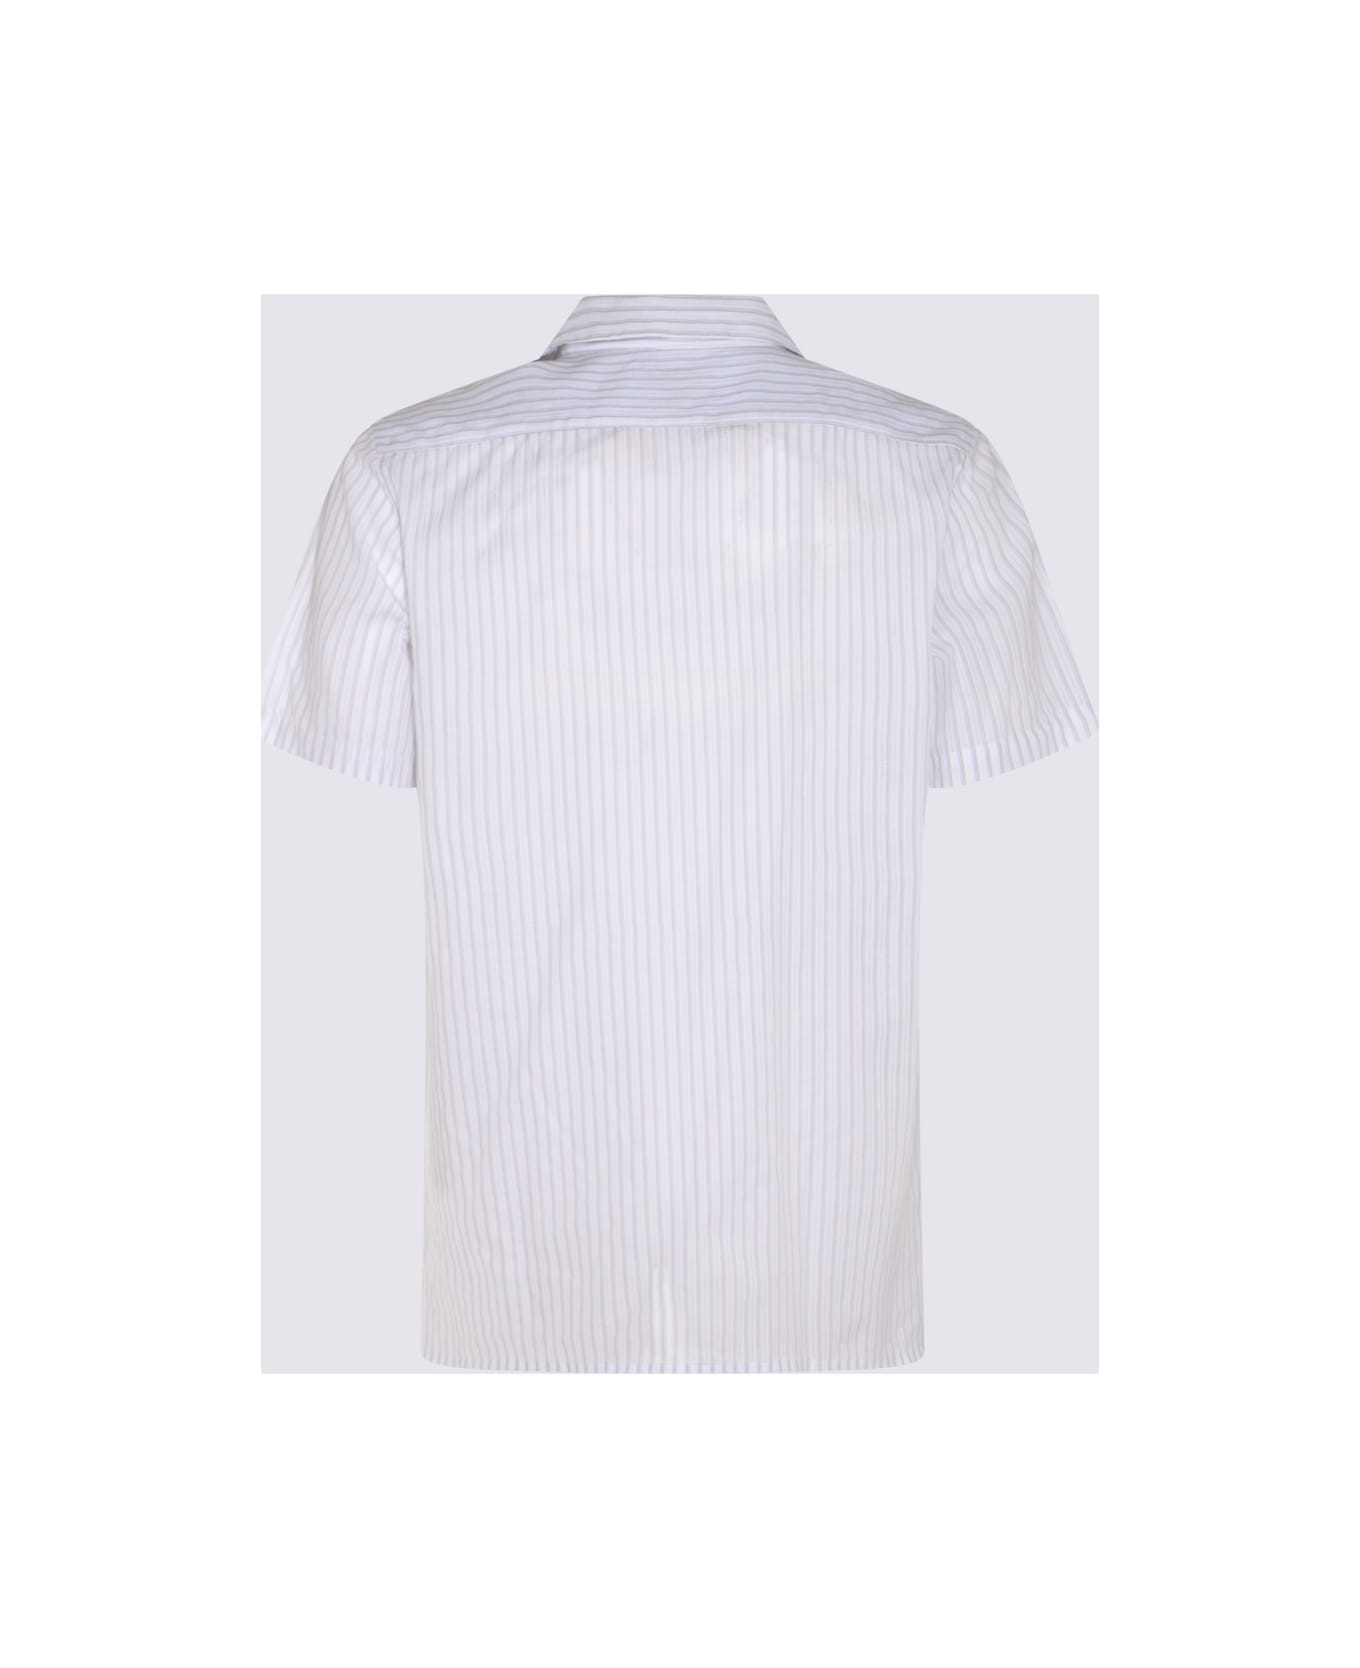 Paul Smith White Cotton Shirt - White シャツ